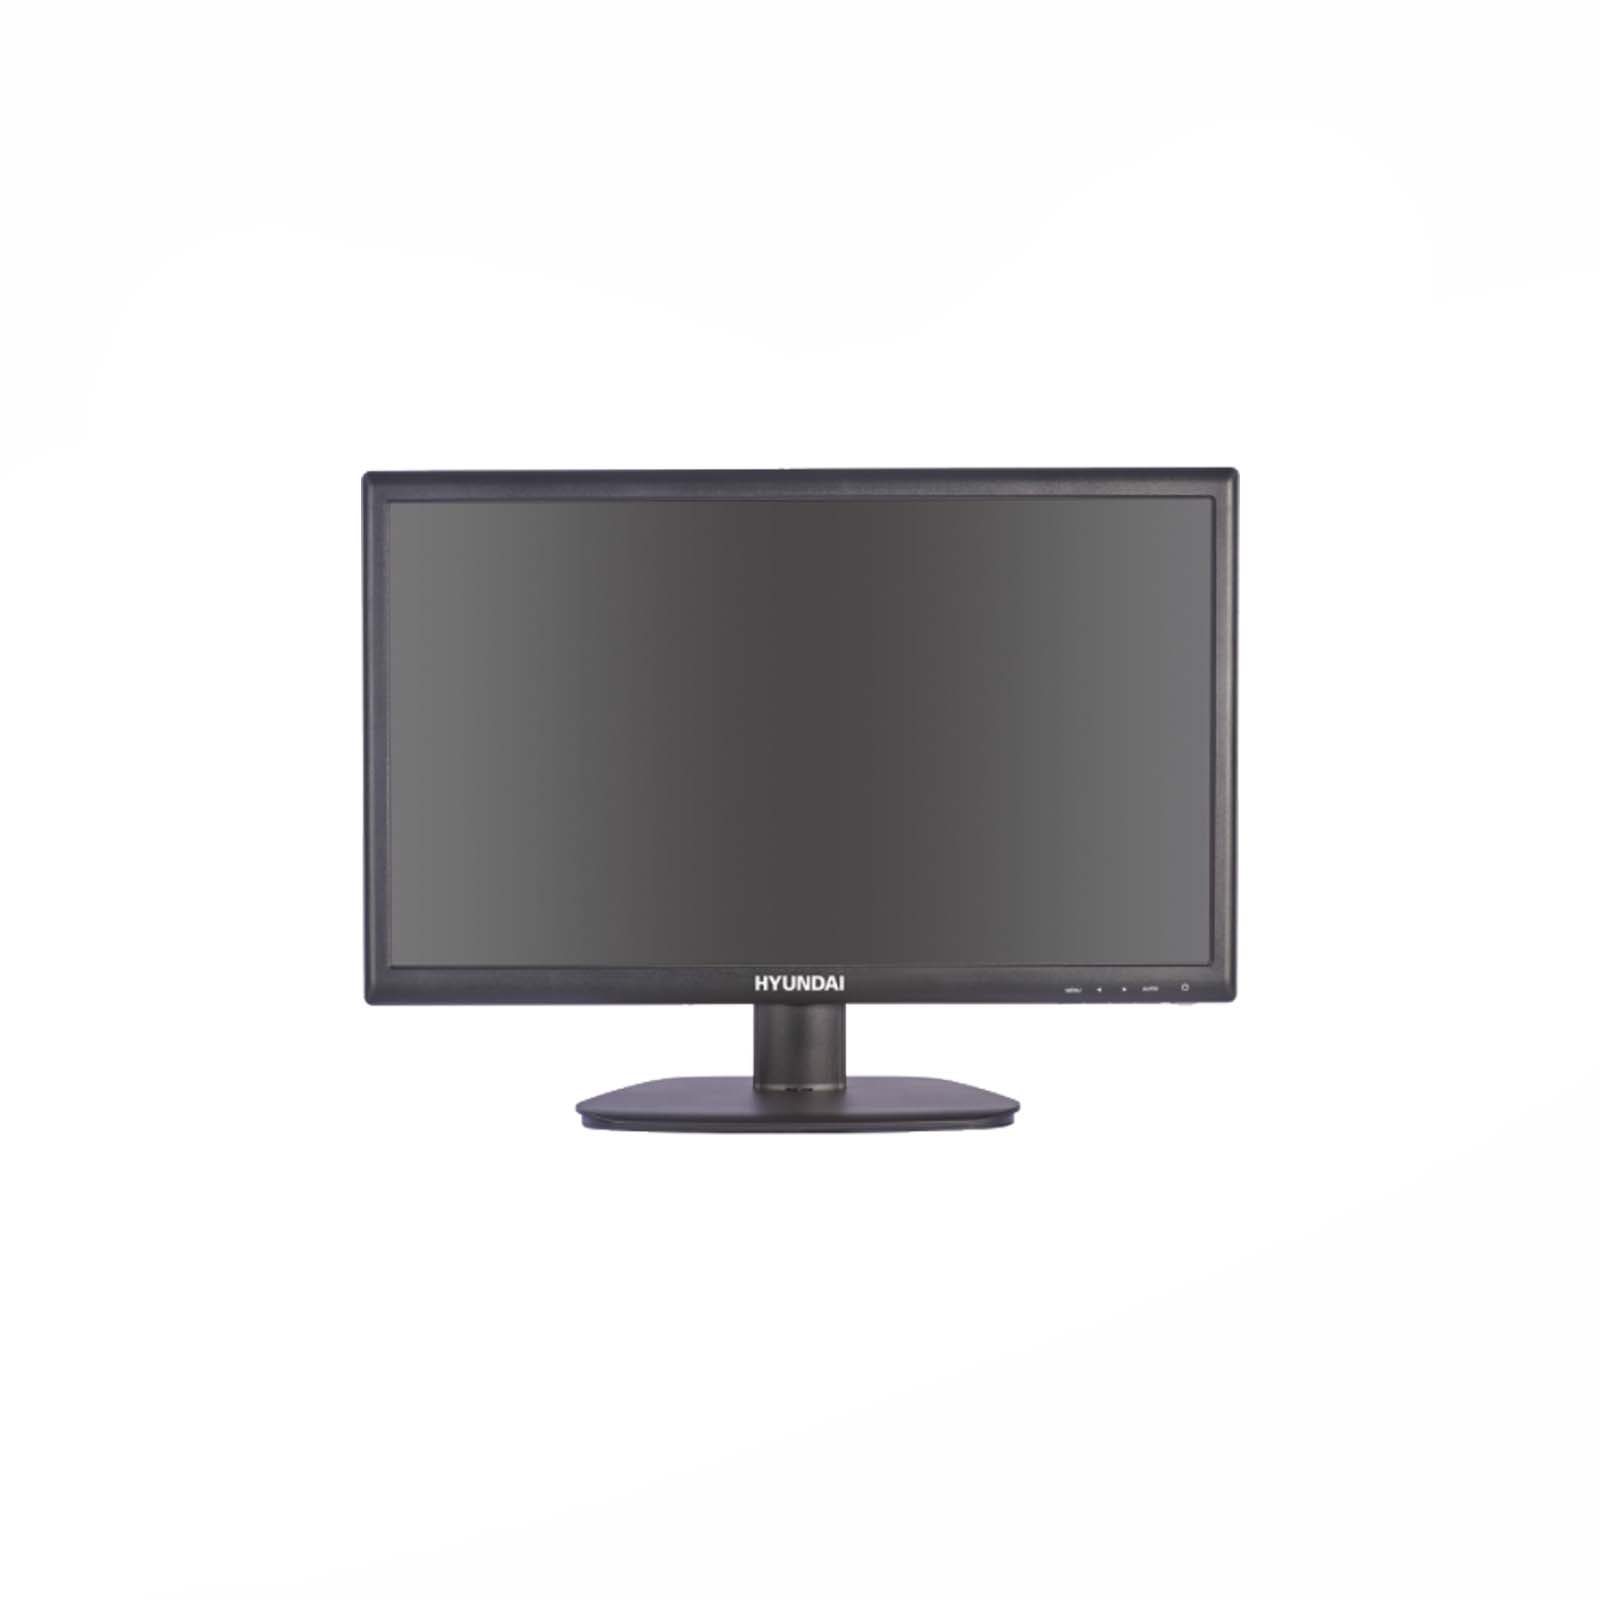 23.6 inch LCD monitor